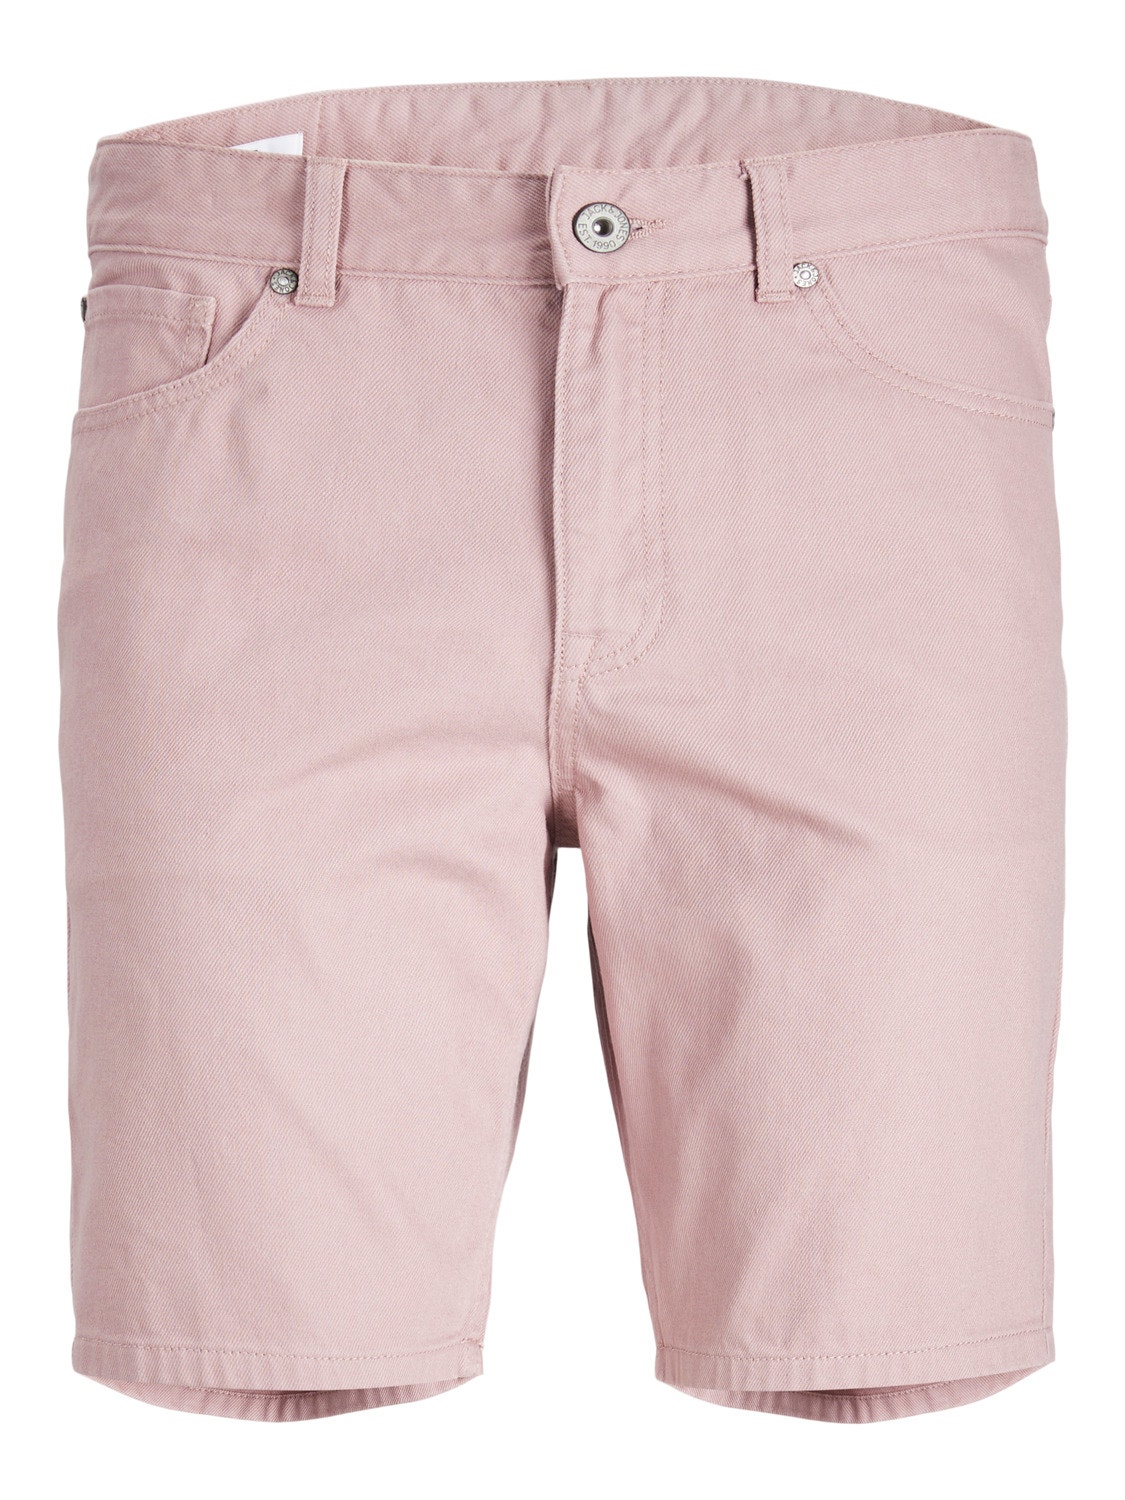 Jack & Jones Relaxed Fit Jeans Shorts -Deauville Mauve - 12229805